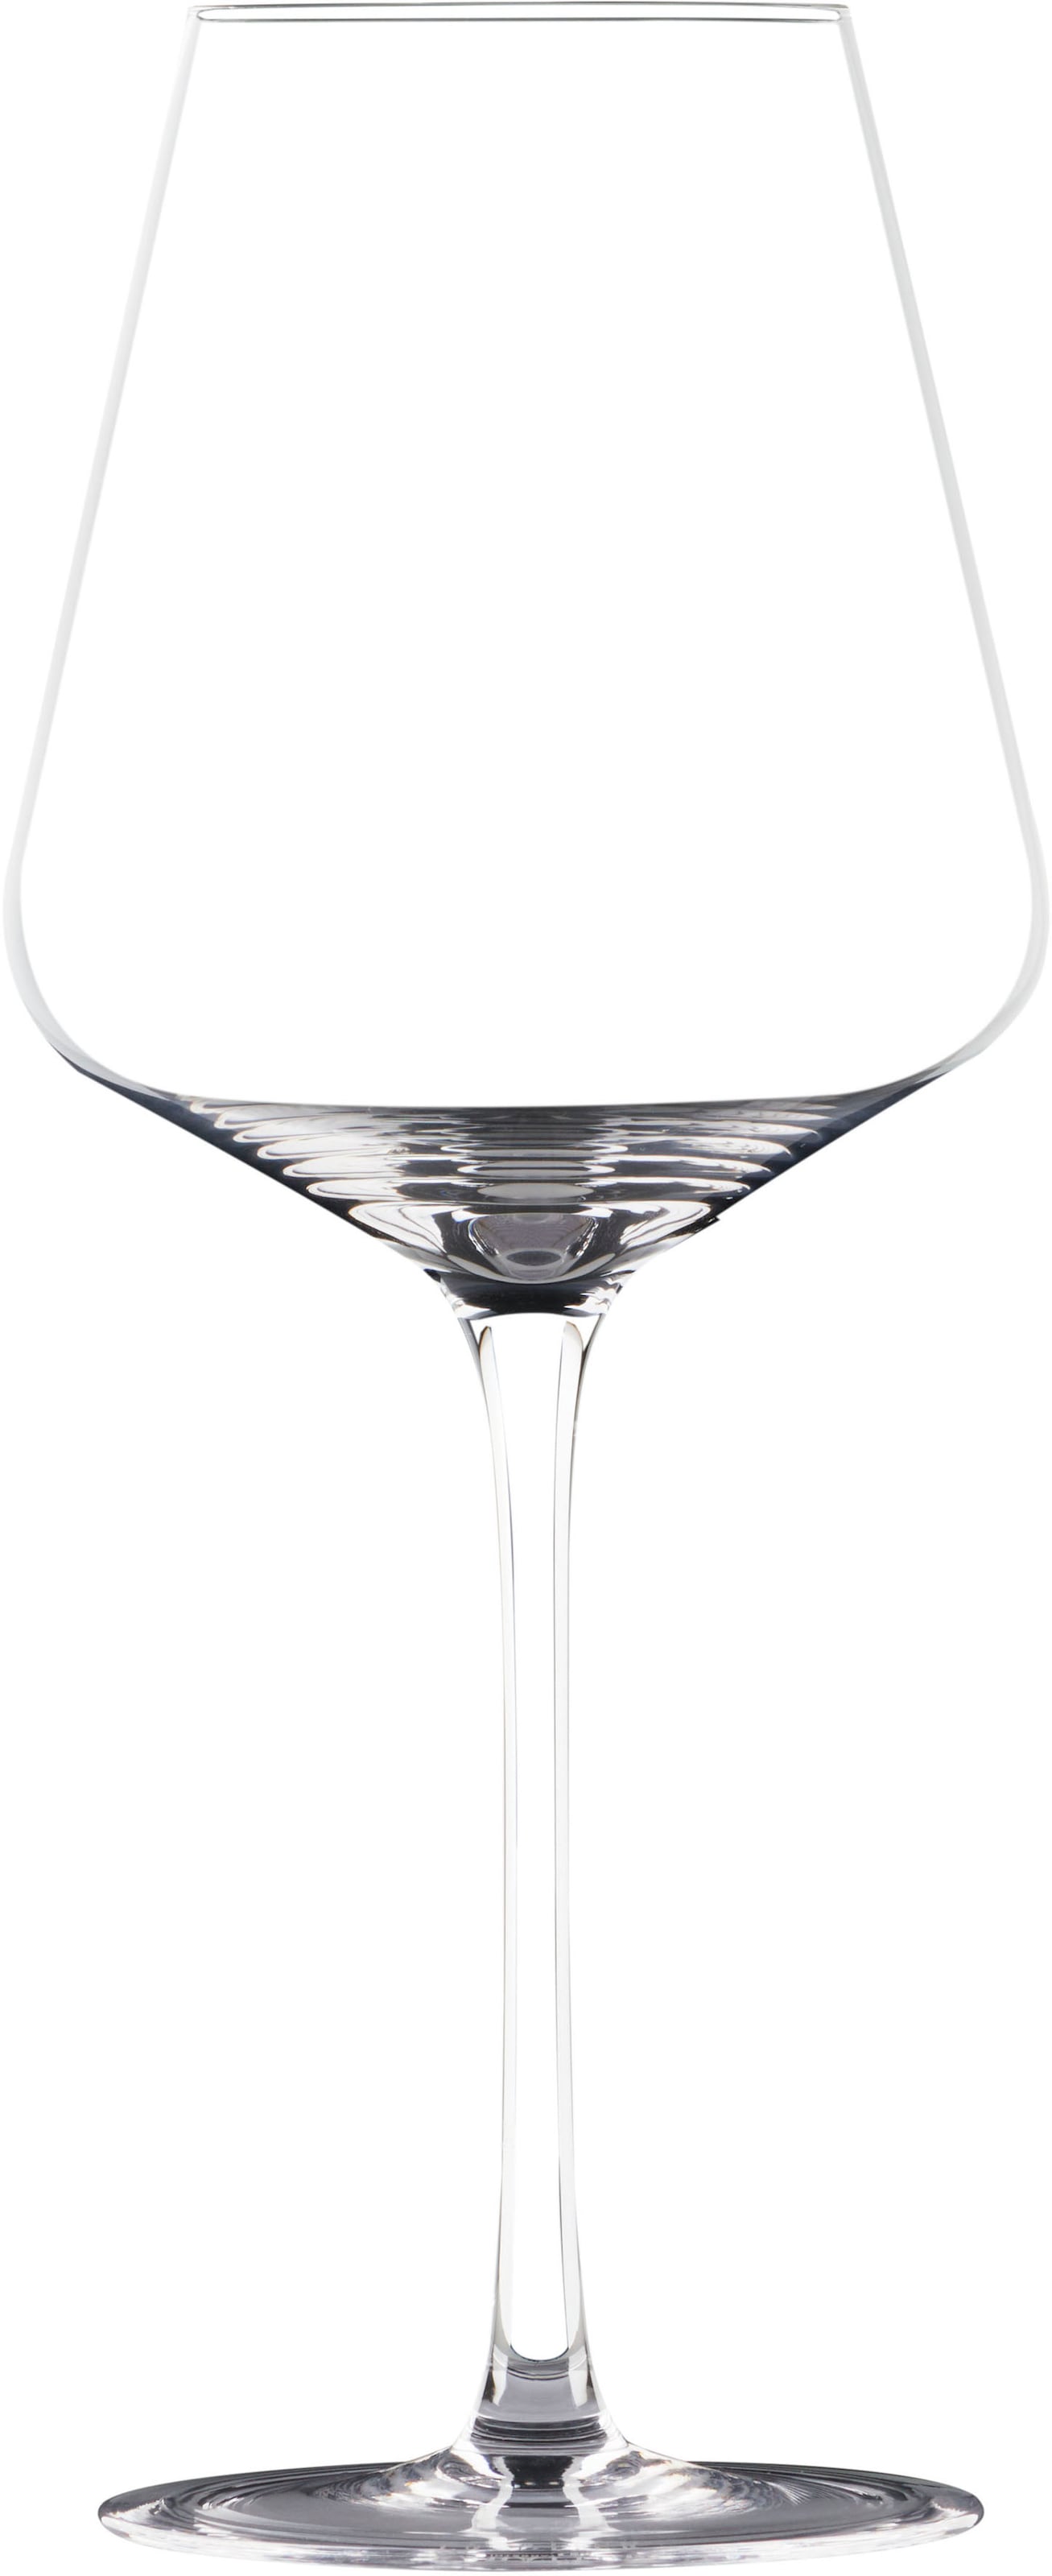 SABATIER International Rotweinglas, (Set, 2 tlg., 2 x Rotwein Kristallglas), Inhalt 700 ml, 2-teilig